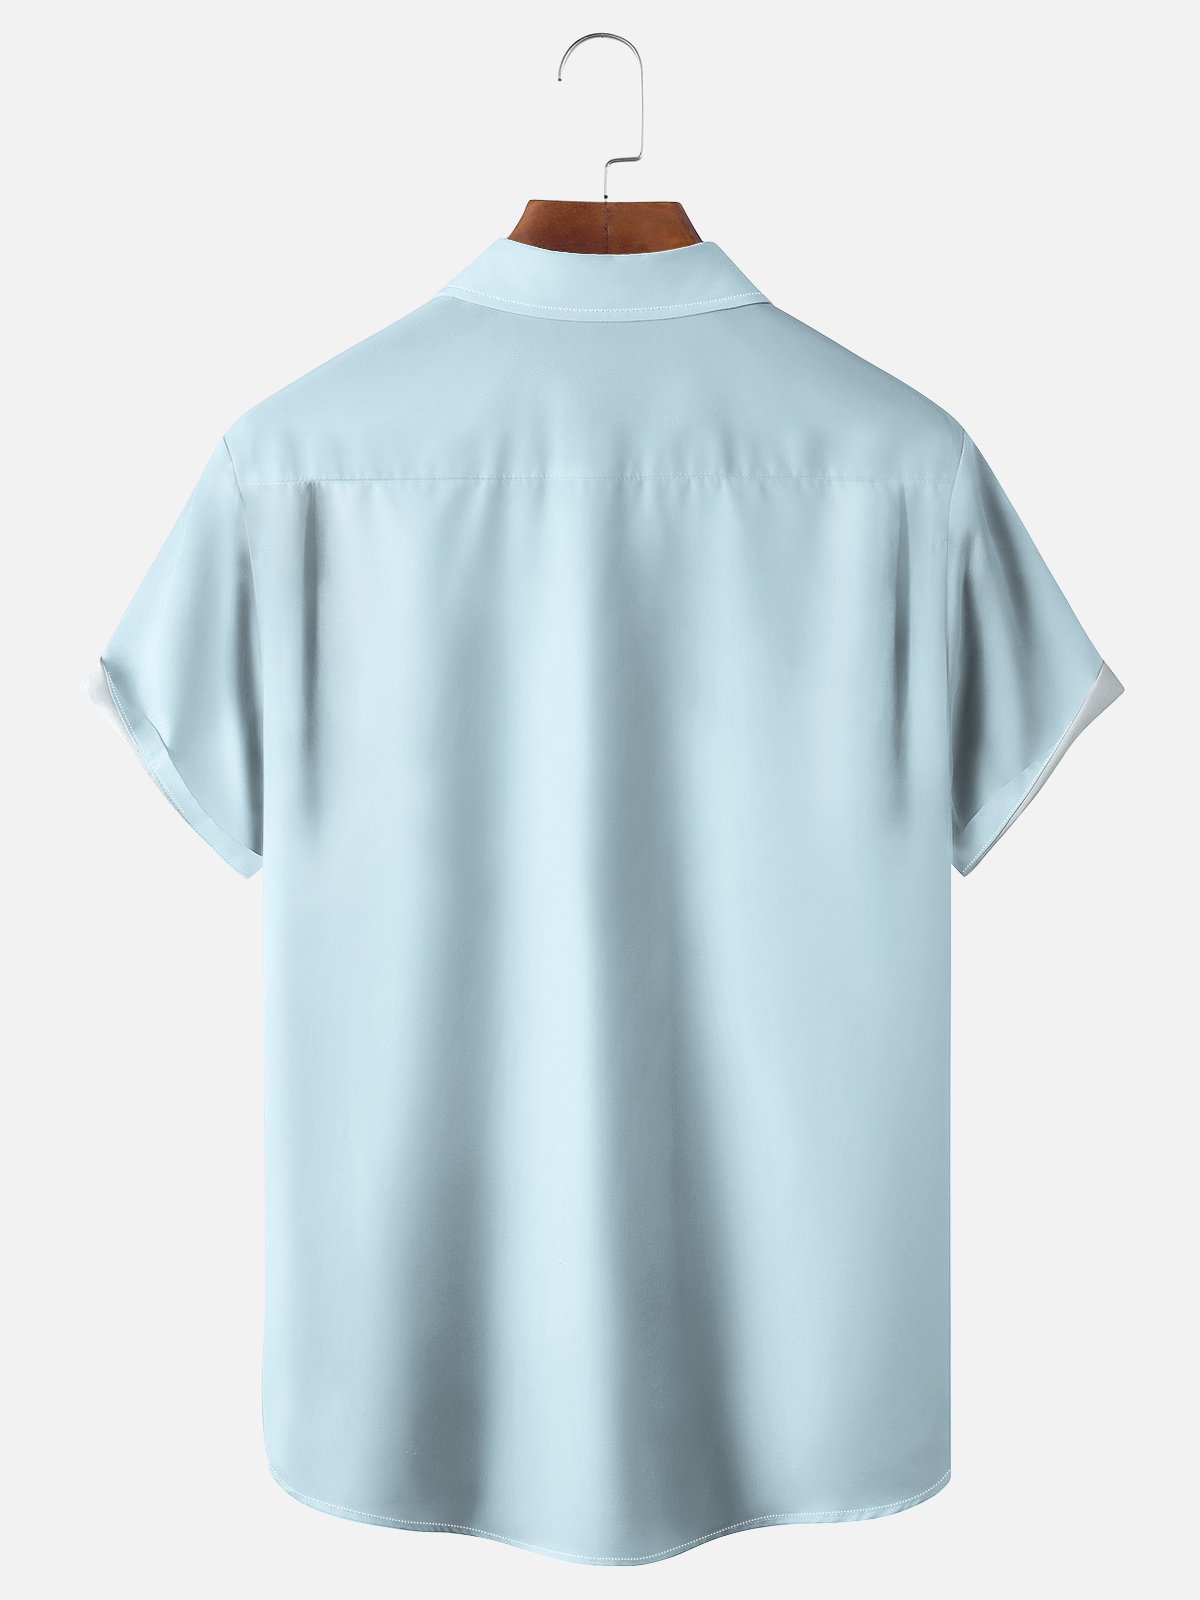 Moisture-wicking Breathable Flamingo Chest Pocket Hawaiian Shirt